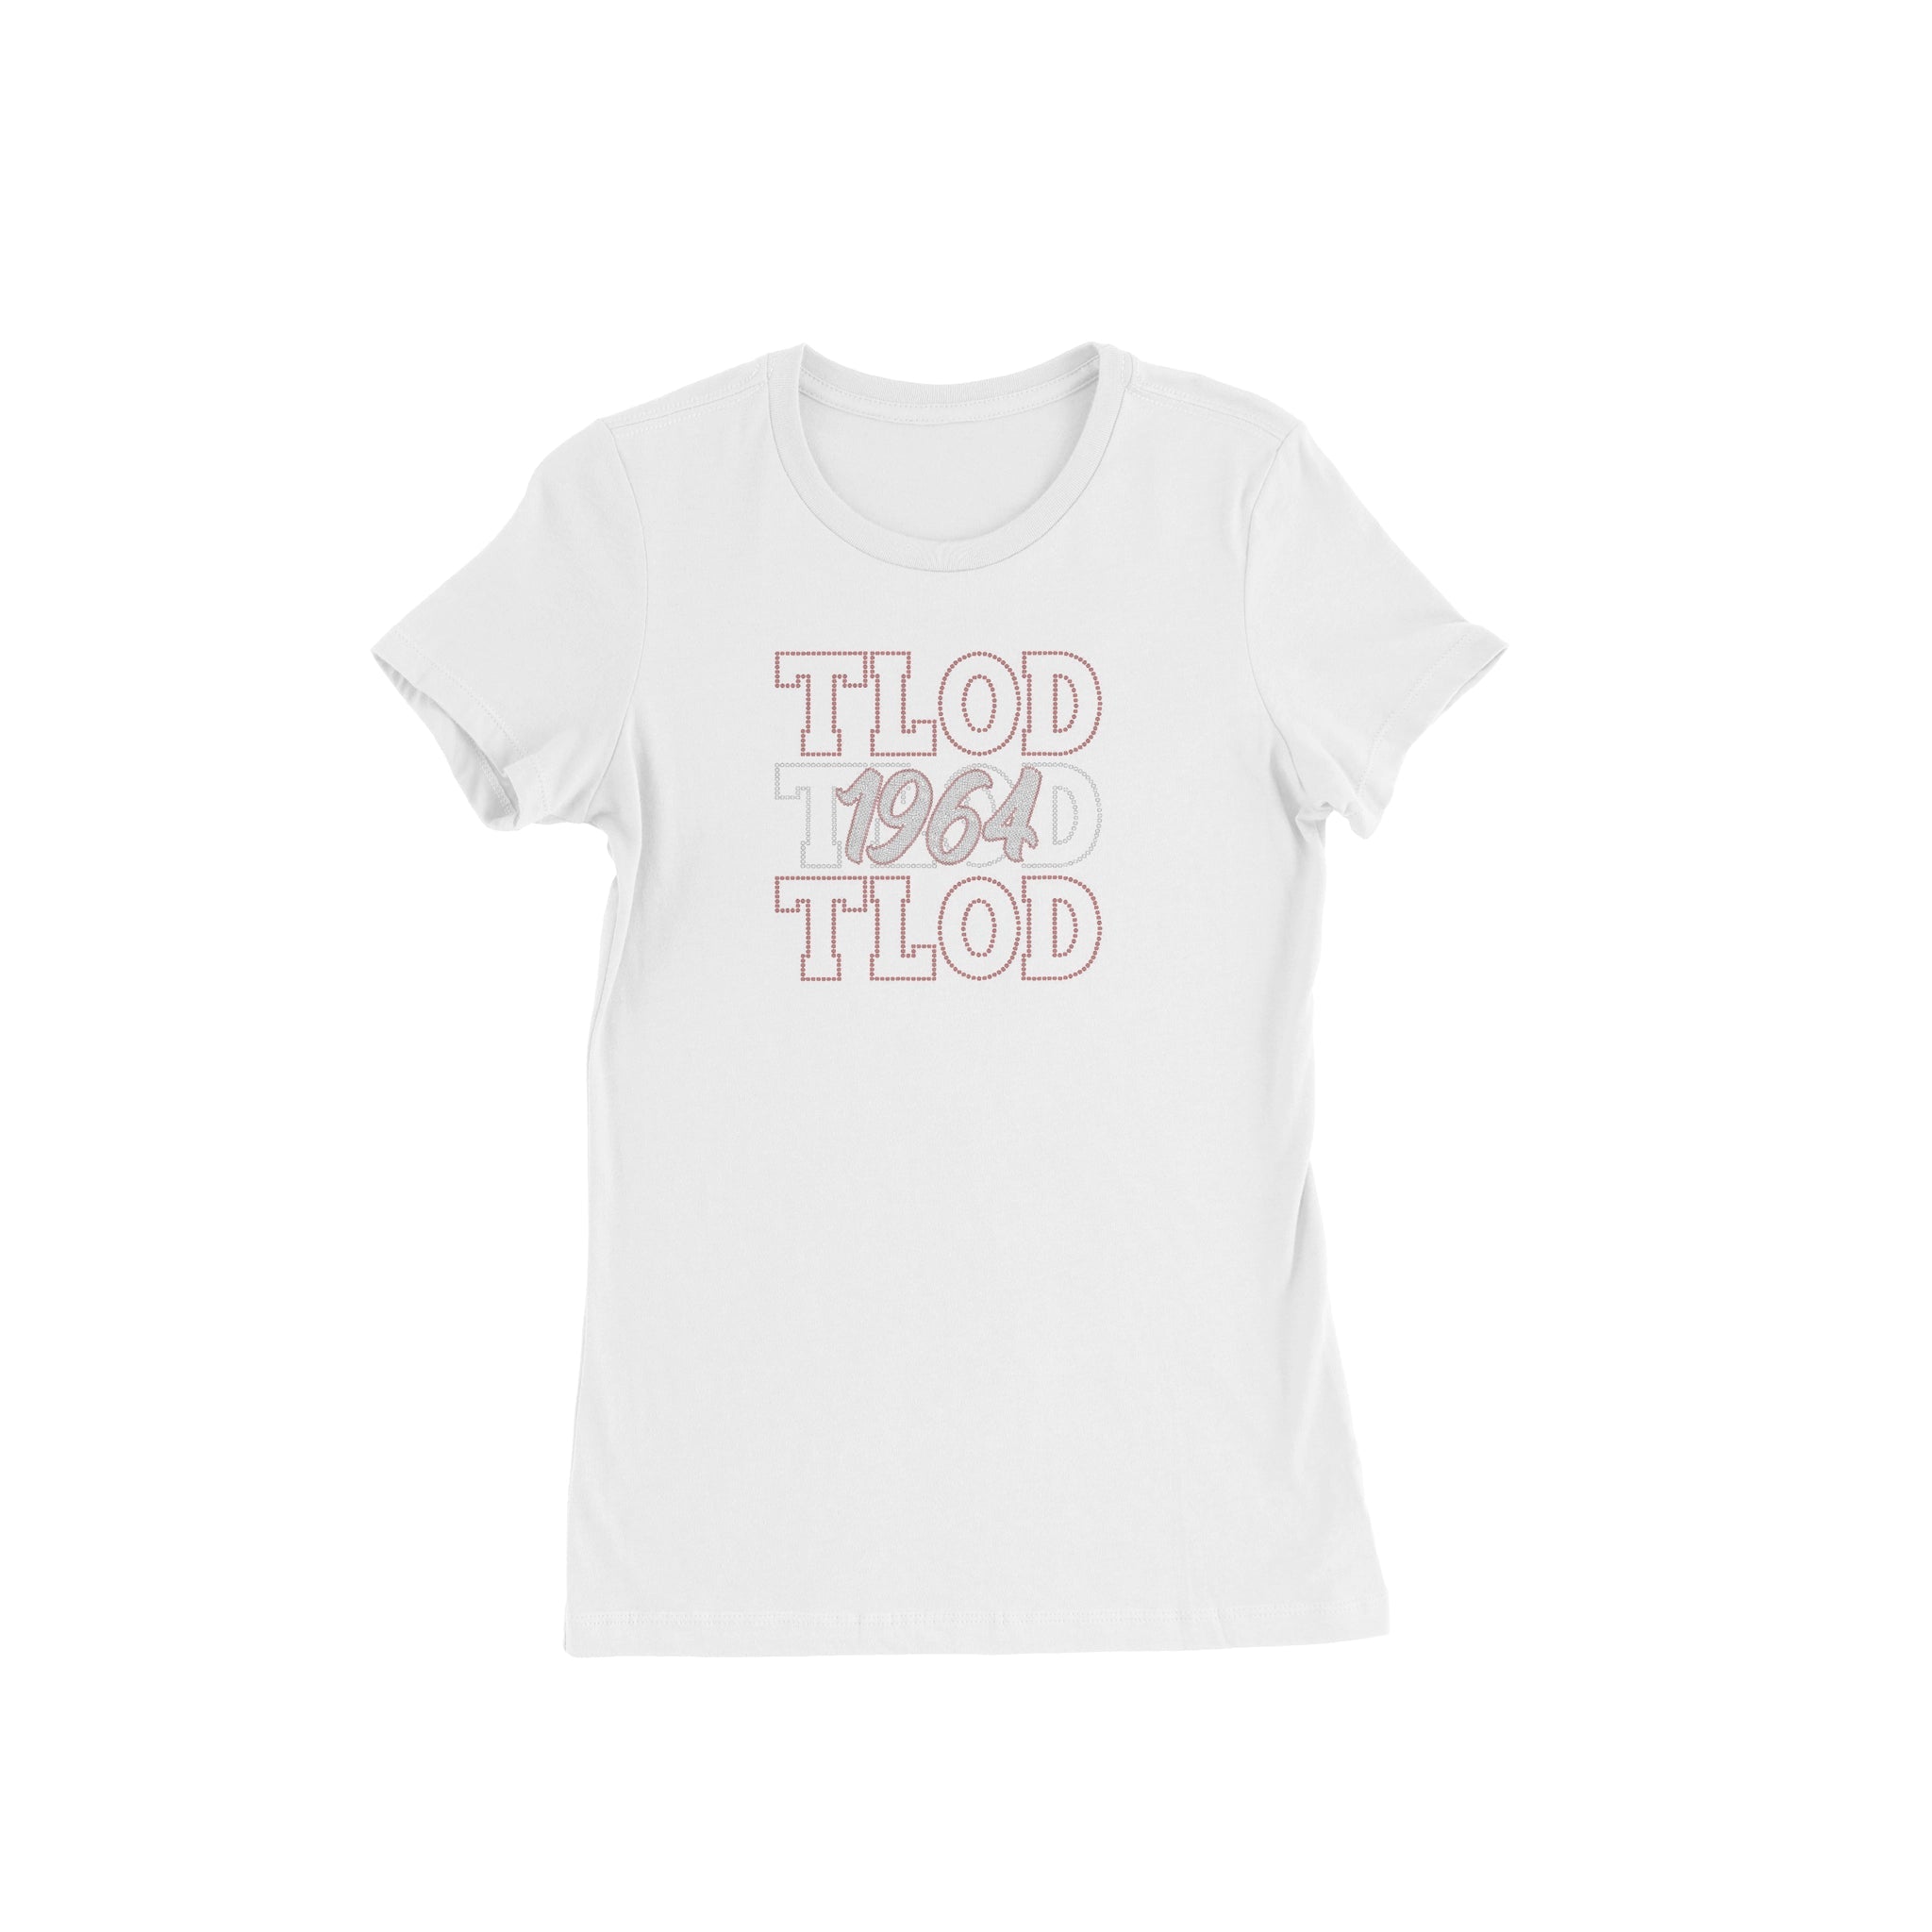 White TLOD 1964 T - Shirt Unisex - Diva Starr Boutique